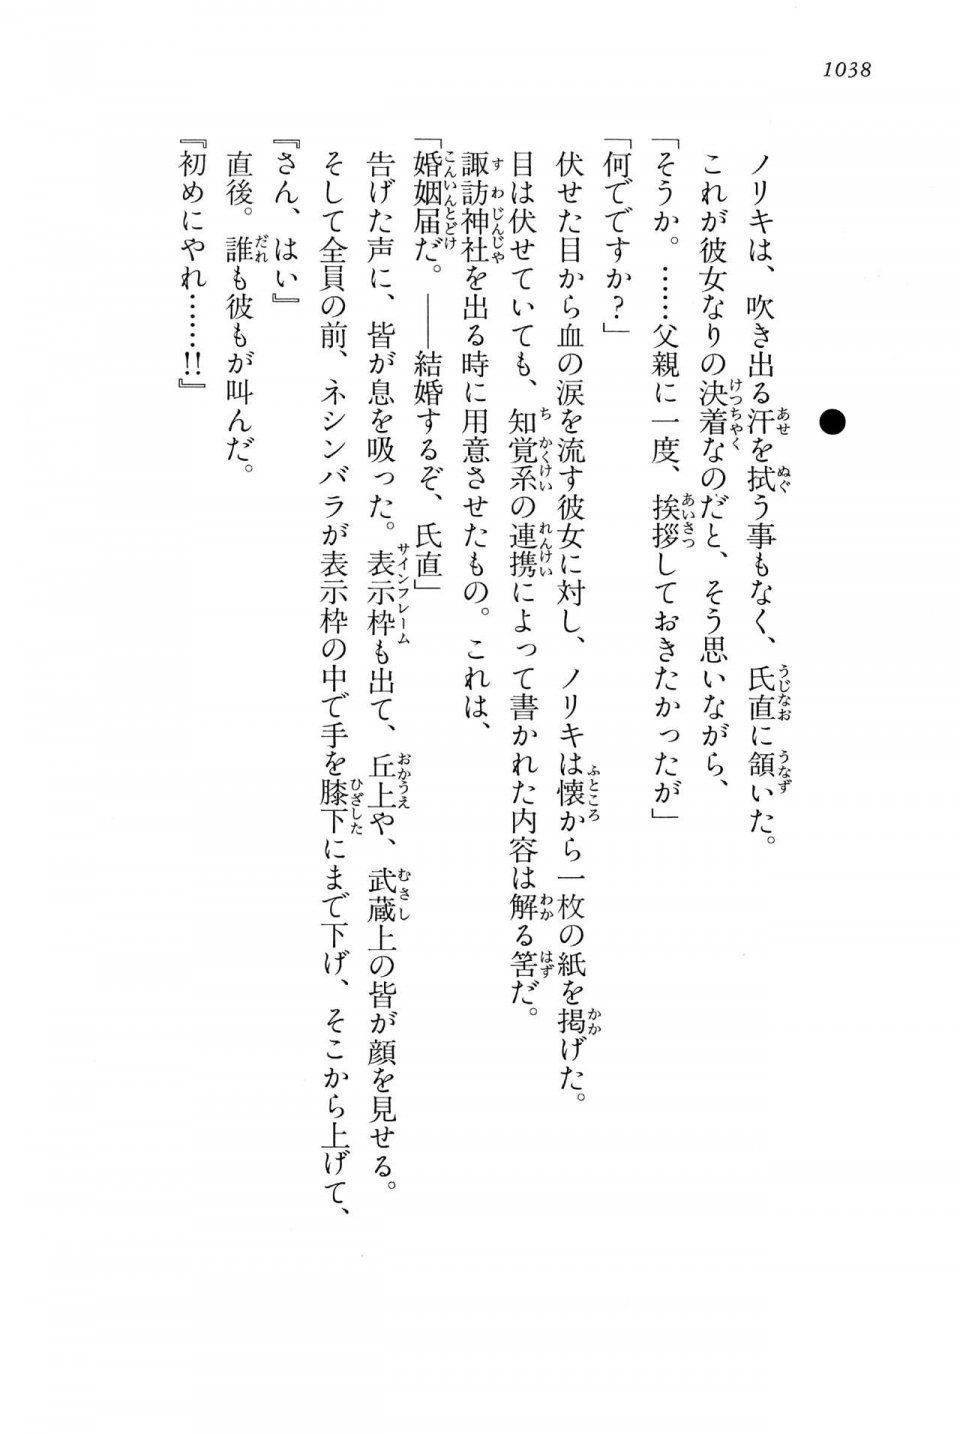 Kyoukai Senjou no Horizon LN Vol 15(6C) Part 2 - Photo #508